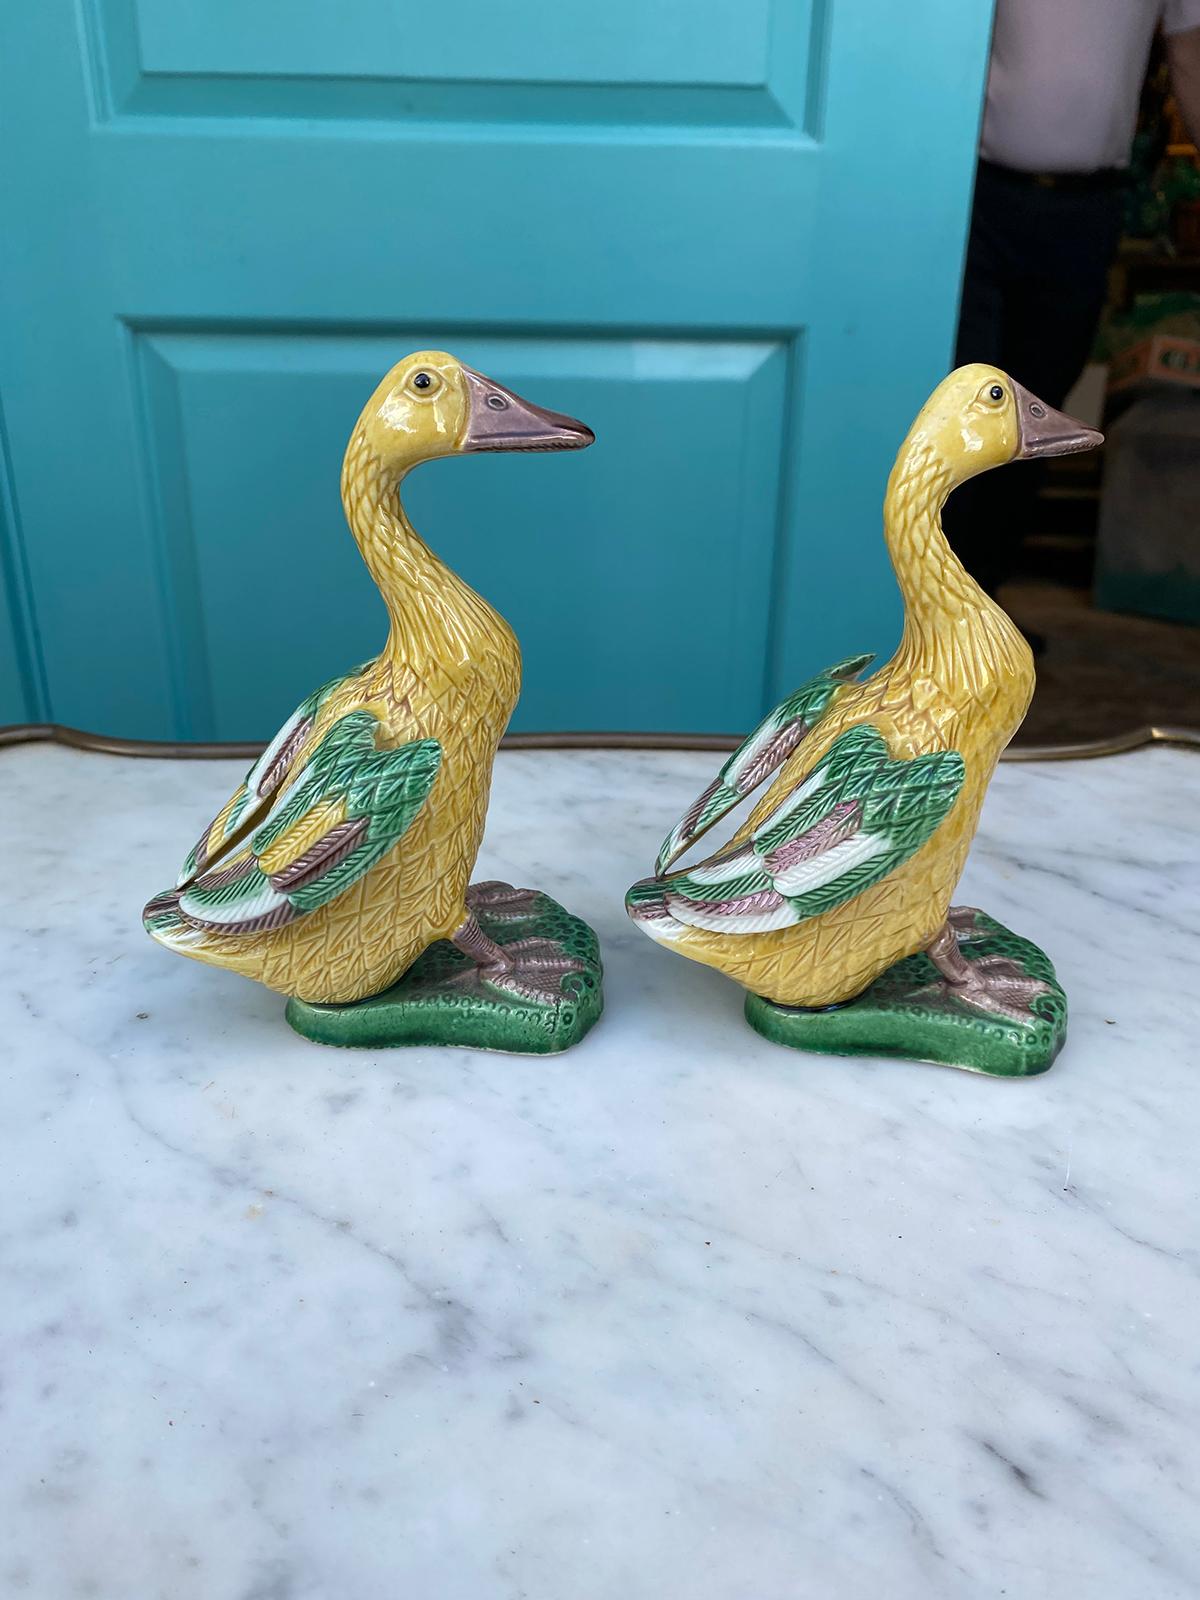 Pair of Early 20th Century Chinese Glazed Ceramic Yellow Ducks, 1 Marked China 3